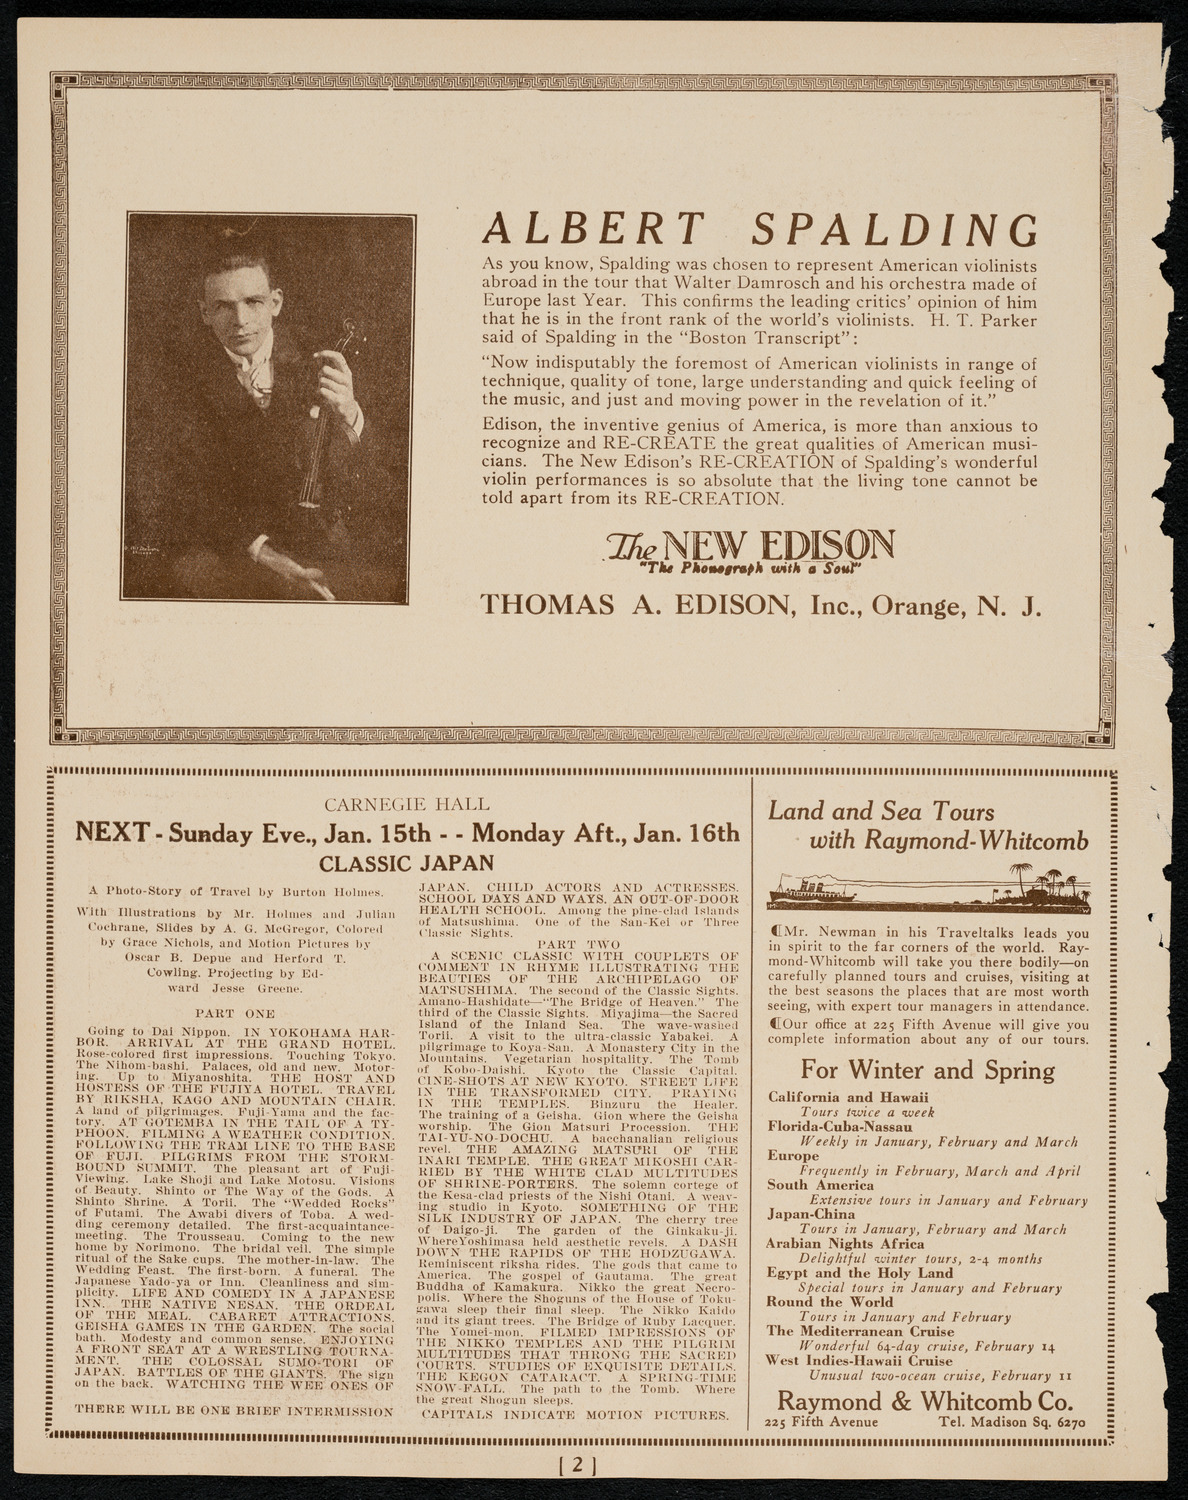 Burton Holmes Travelogue: Mexico, January 8, 1922, program page 2